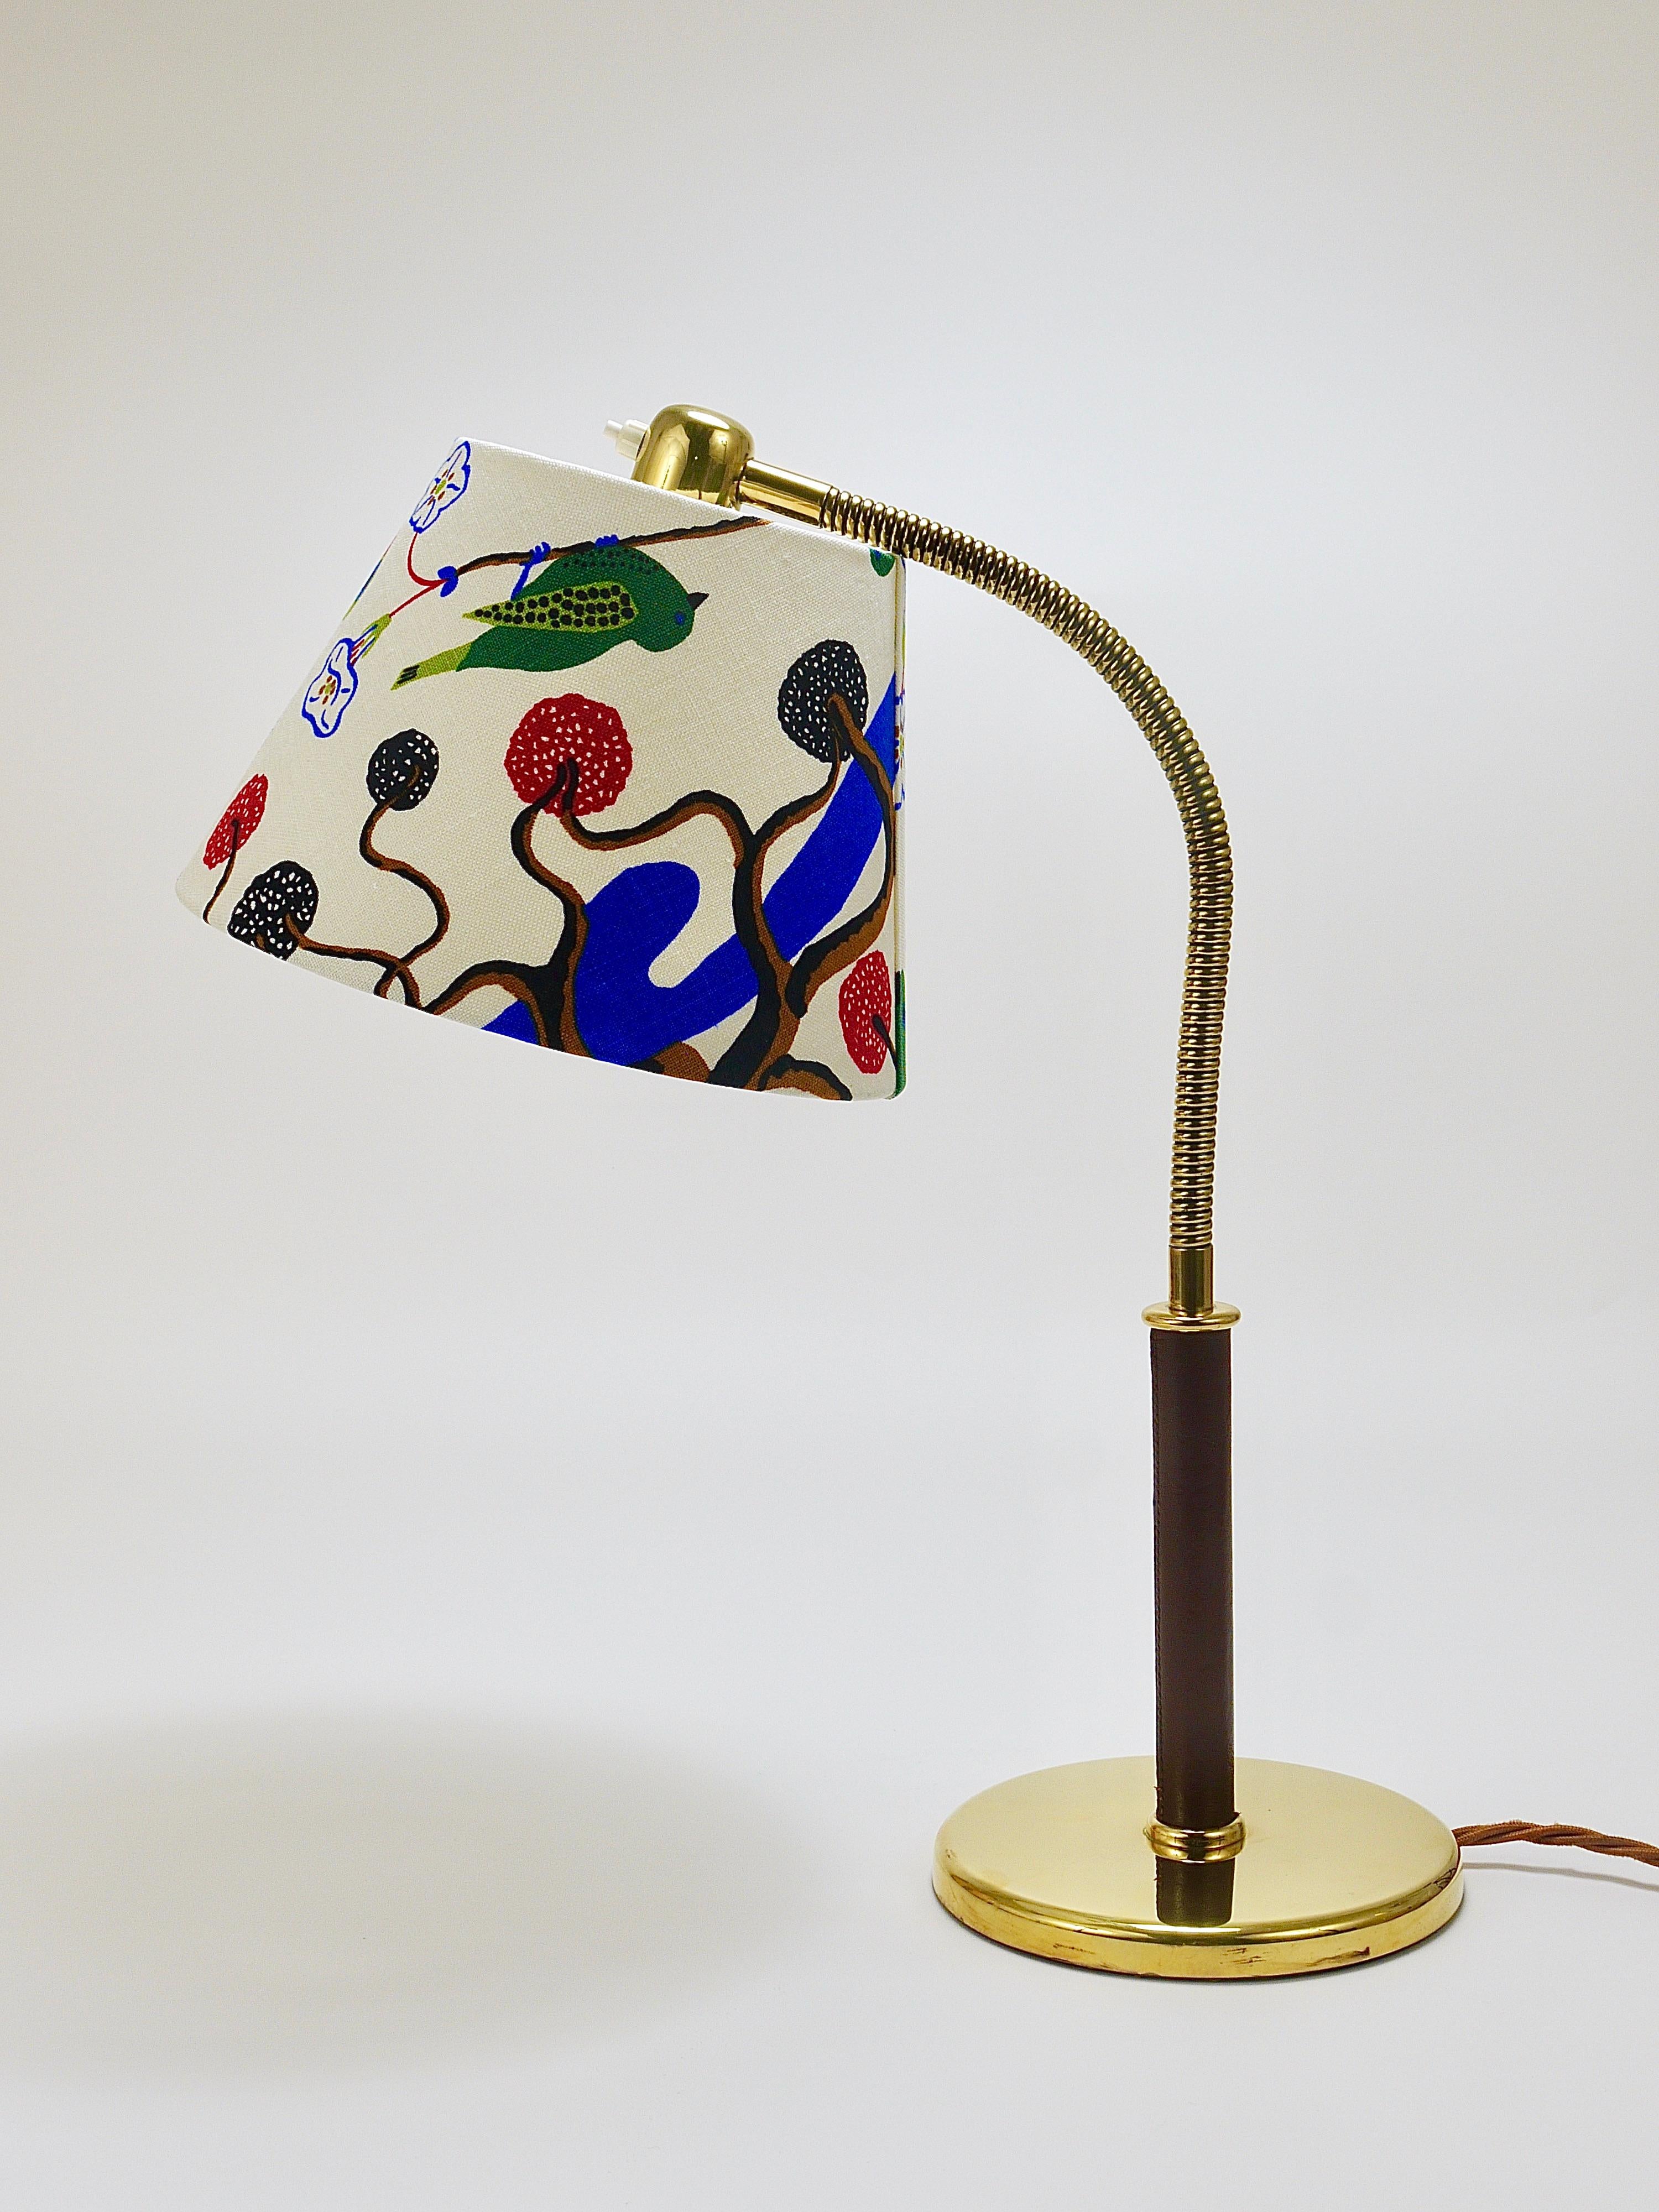 Josef Frank J.T. Kalmar Table Lamp Tisch-Überall, Brass & Leather, Austria, 1930 For Sale 6